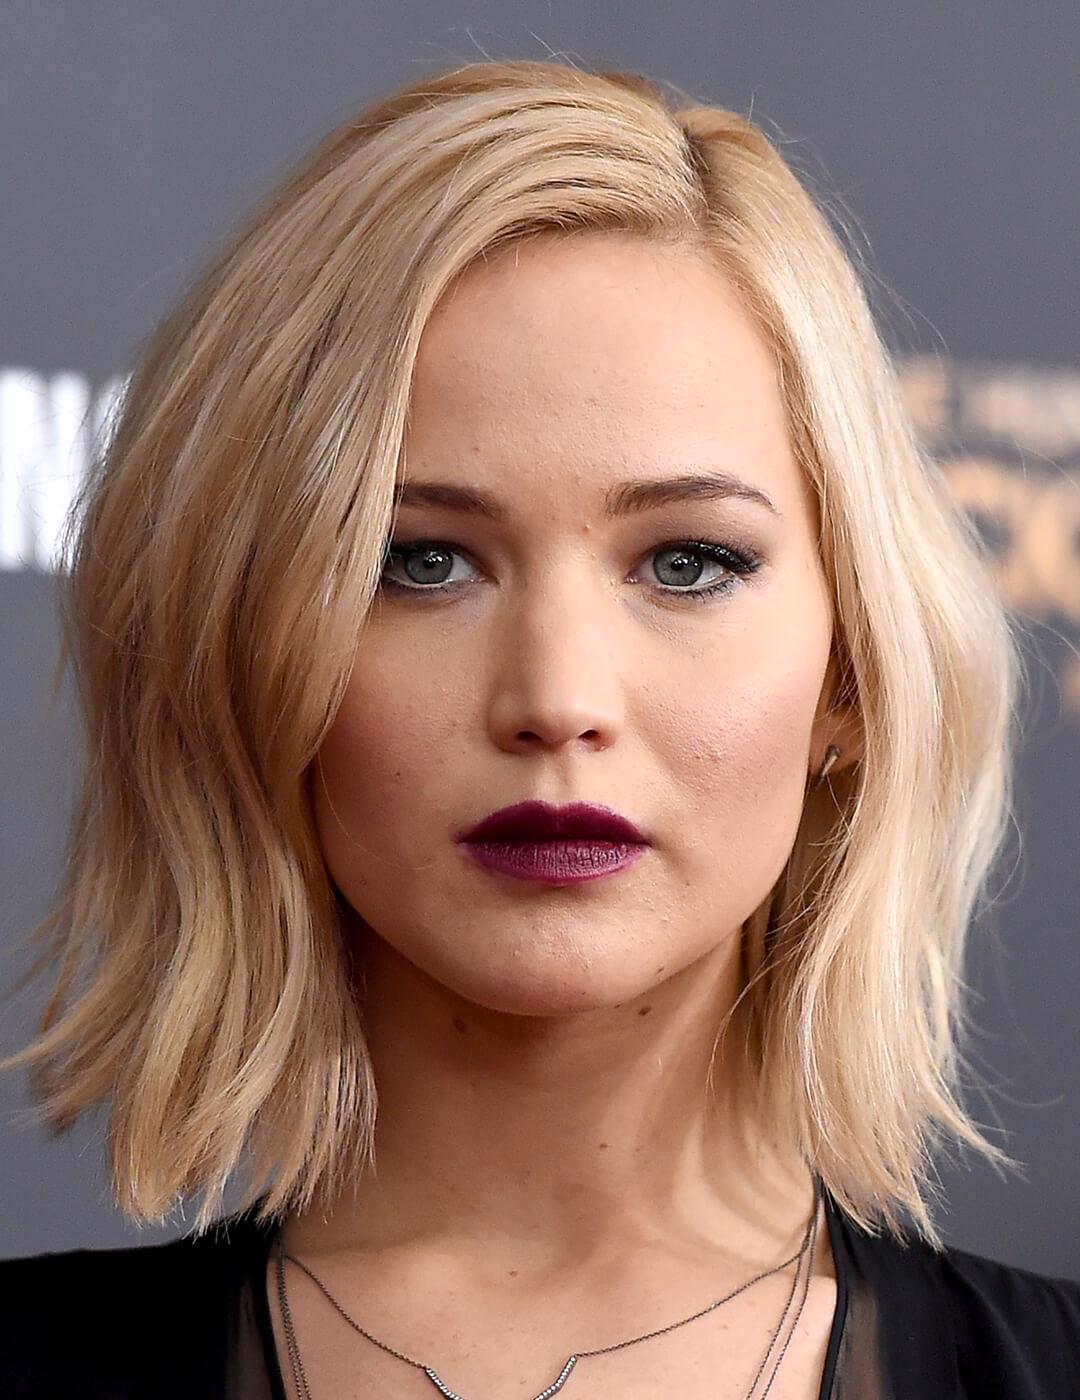 A photo of Jennifer Lawrence looking fierce in her wavy, blonde hair with purple lipstick